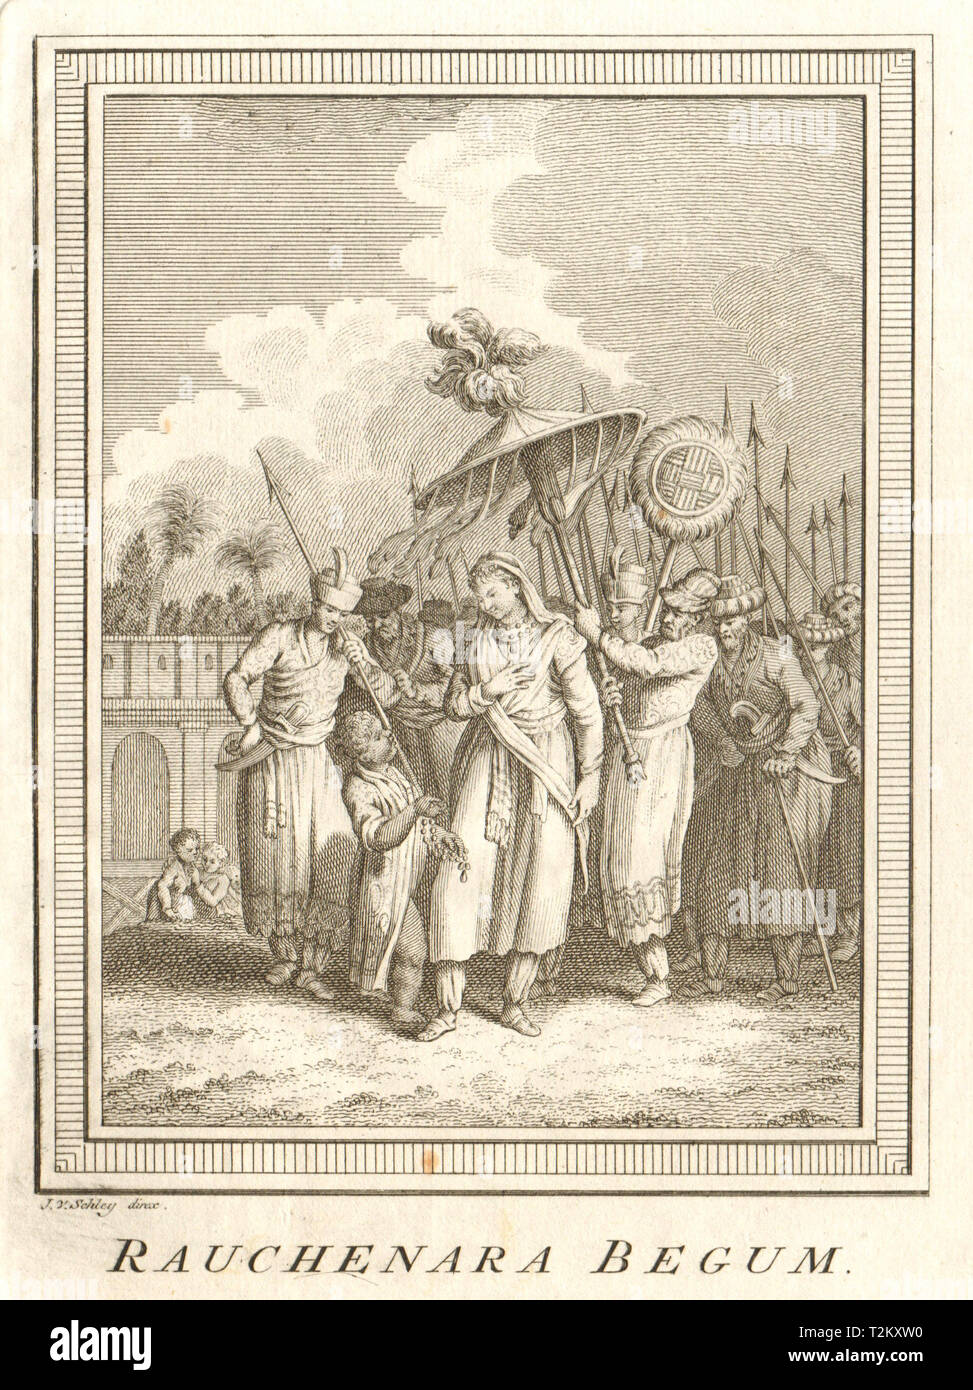 'Rauchenara Begum'. Roshanara Begum, Mughal Princess. India. SCHLEY 1755 print Stock Photo